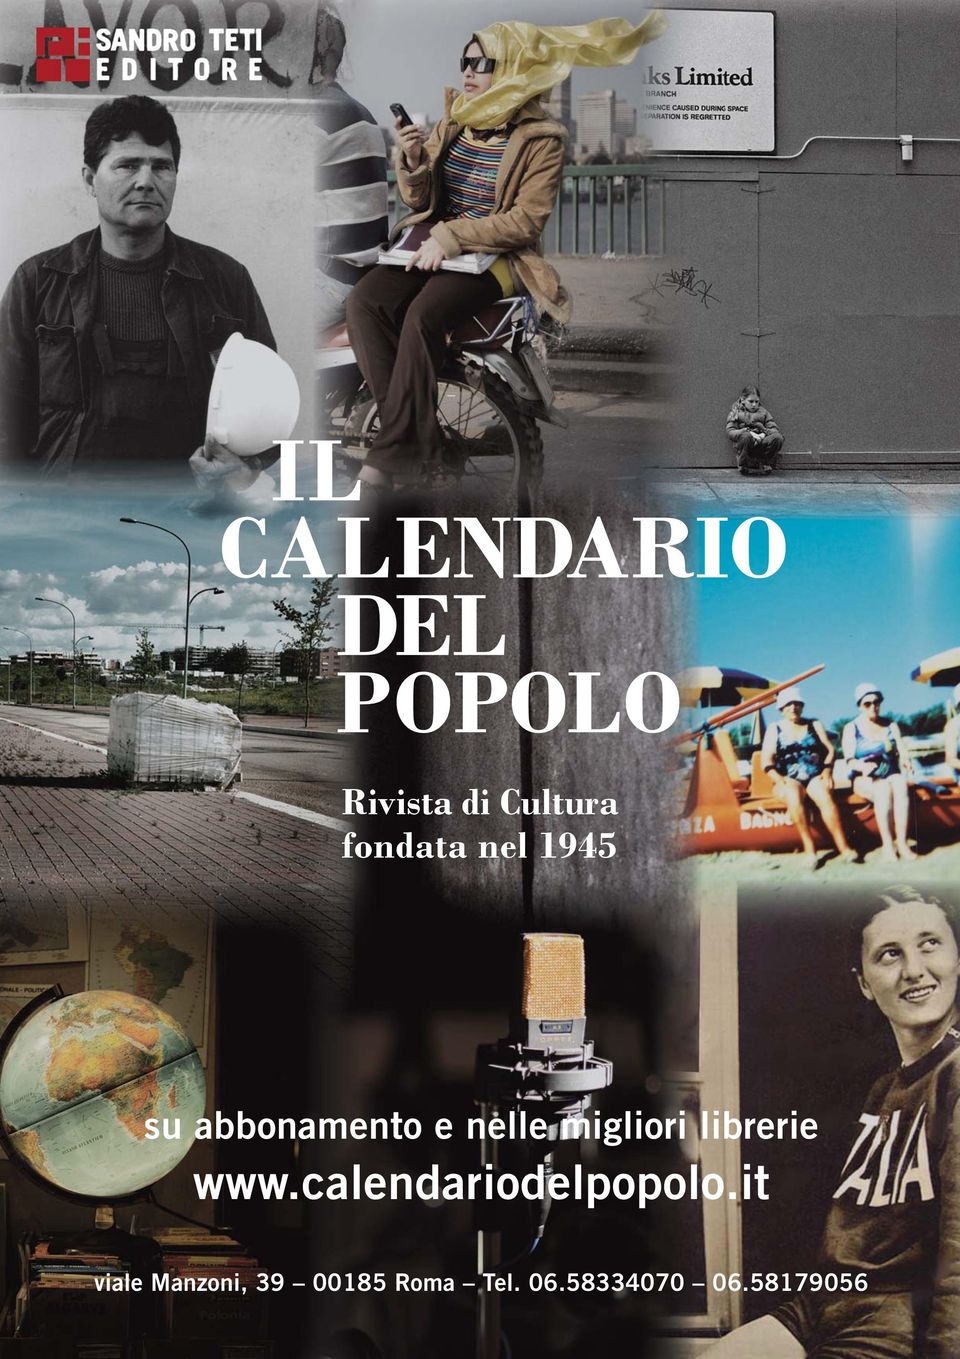 www.calendariodelpopolo.